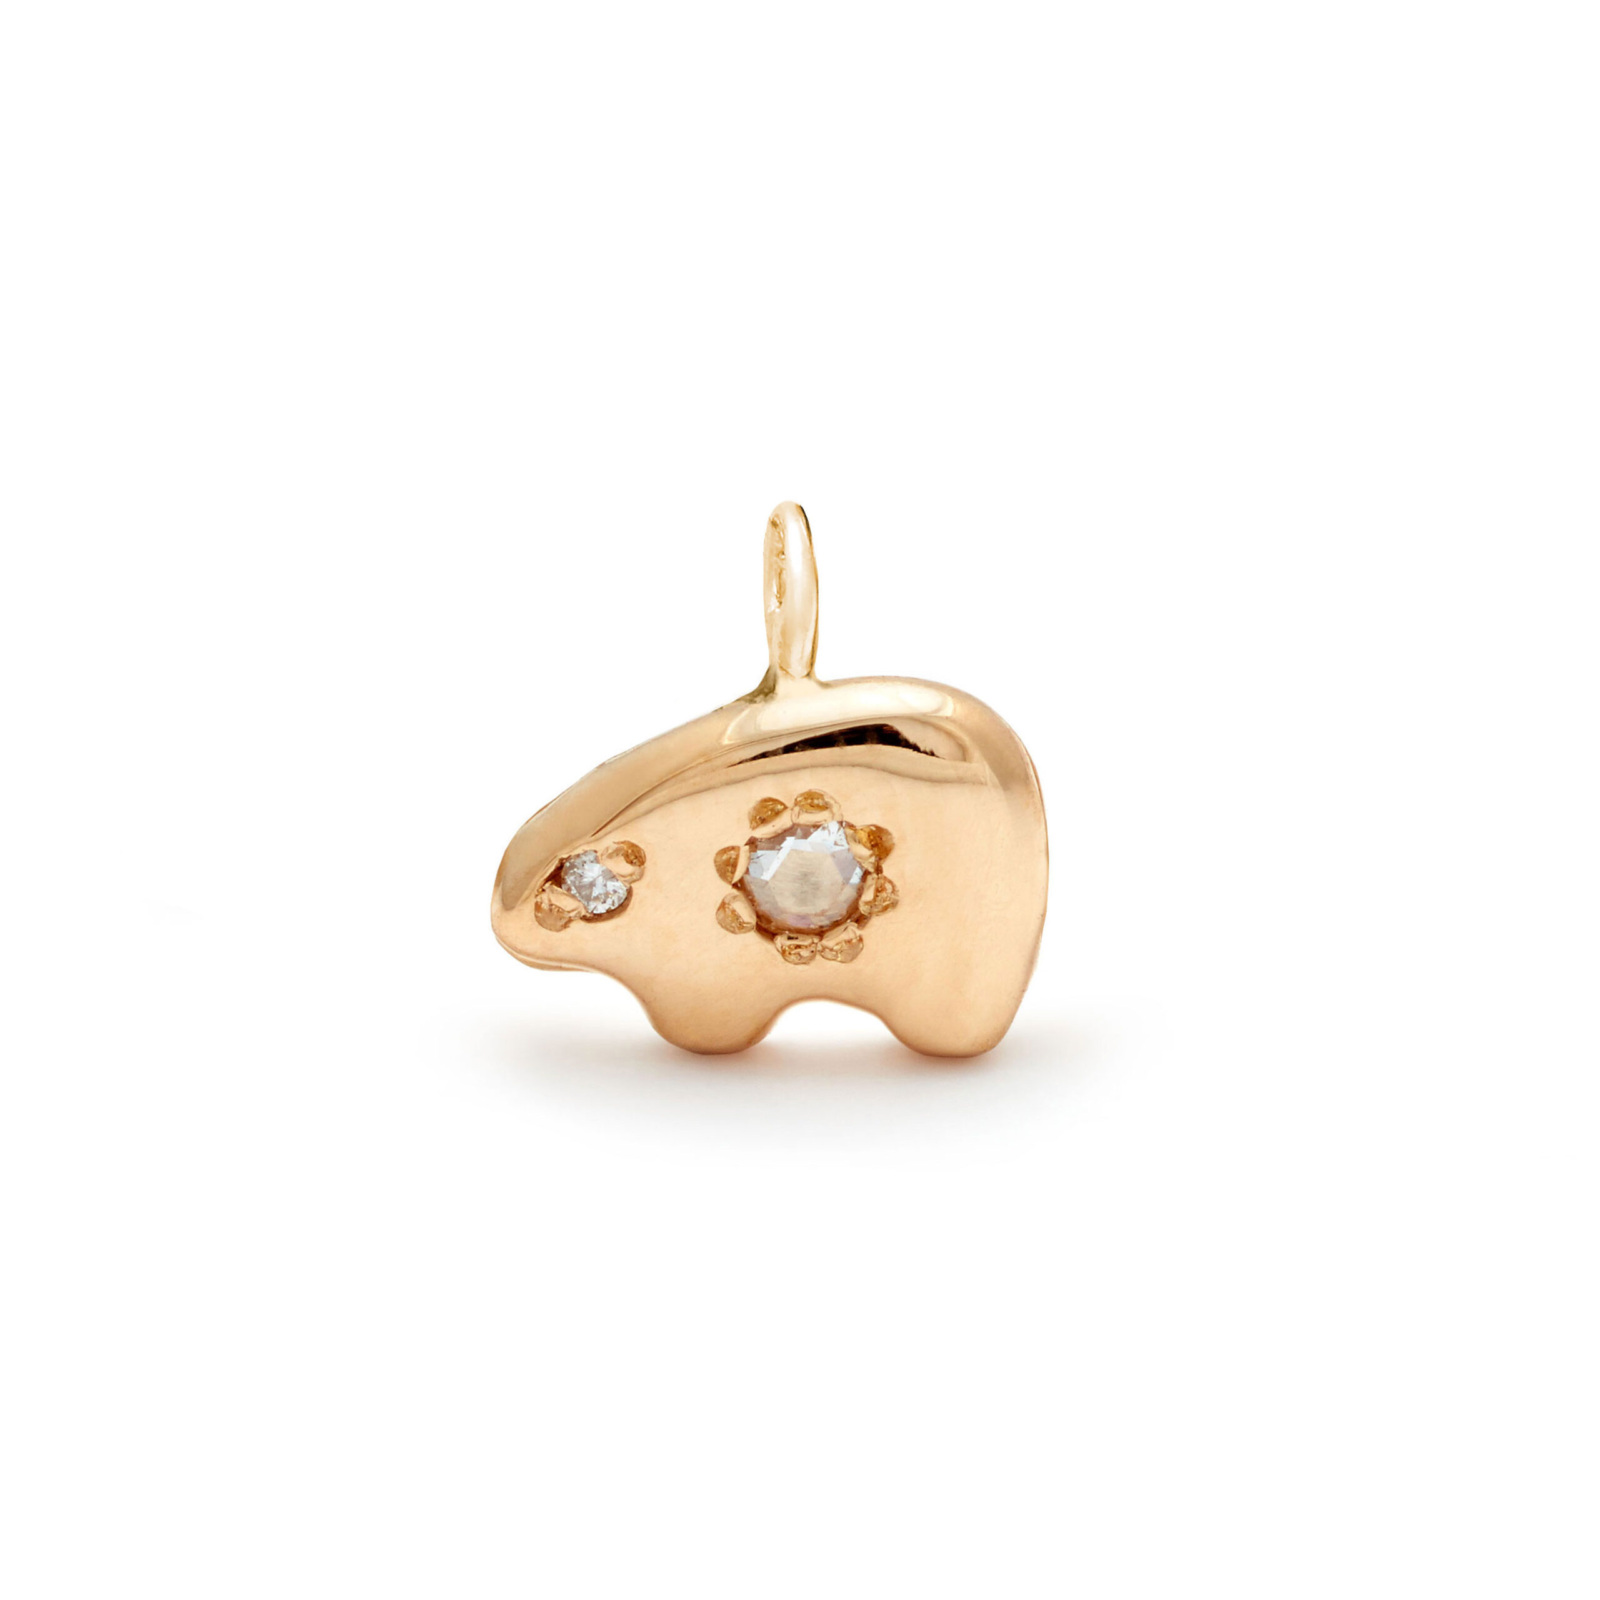 bear charm pendant jewelry - rosecut diamond - yellow gold